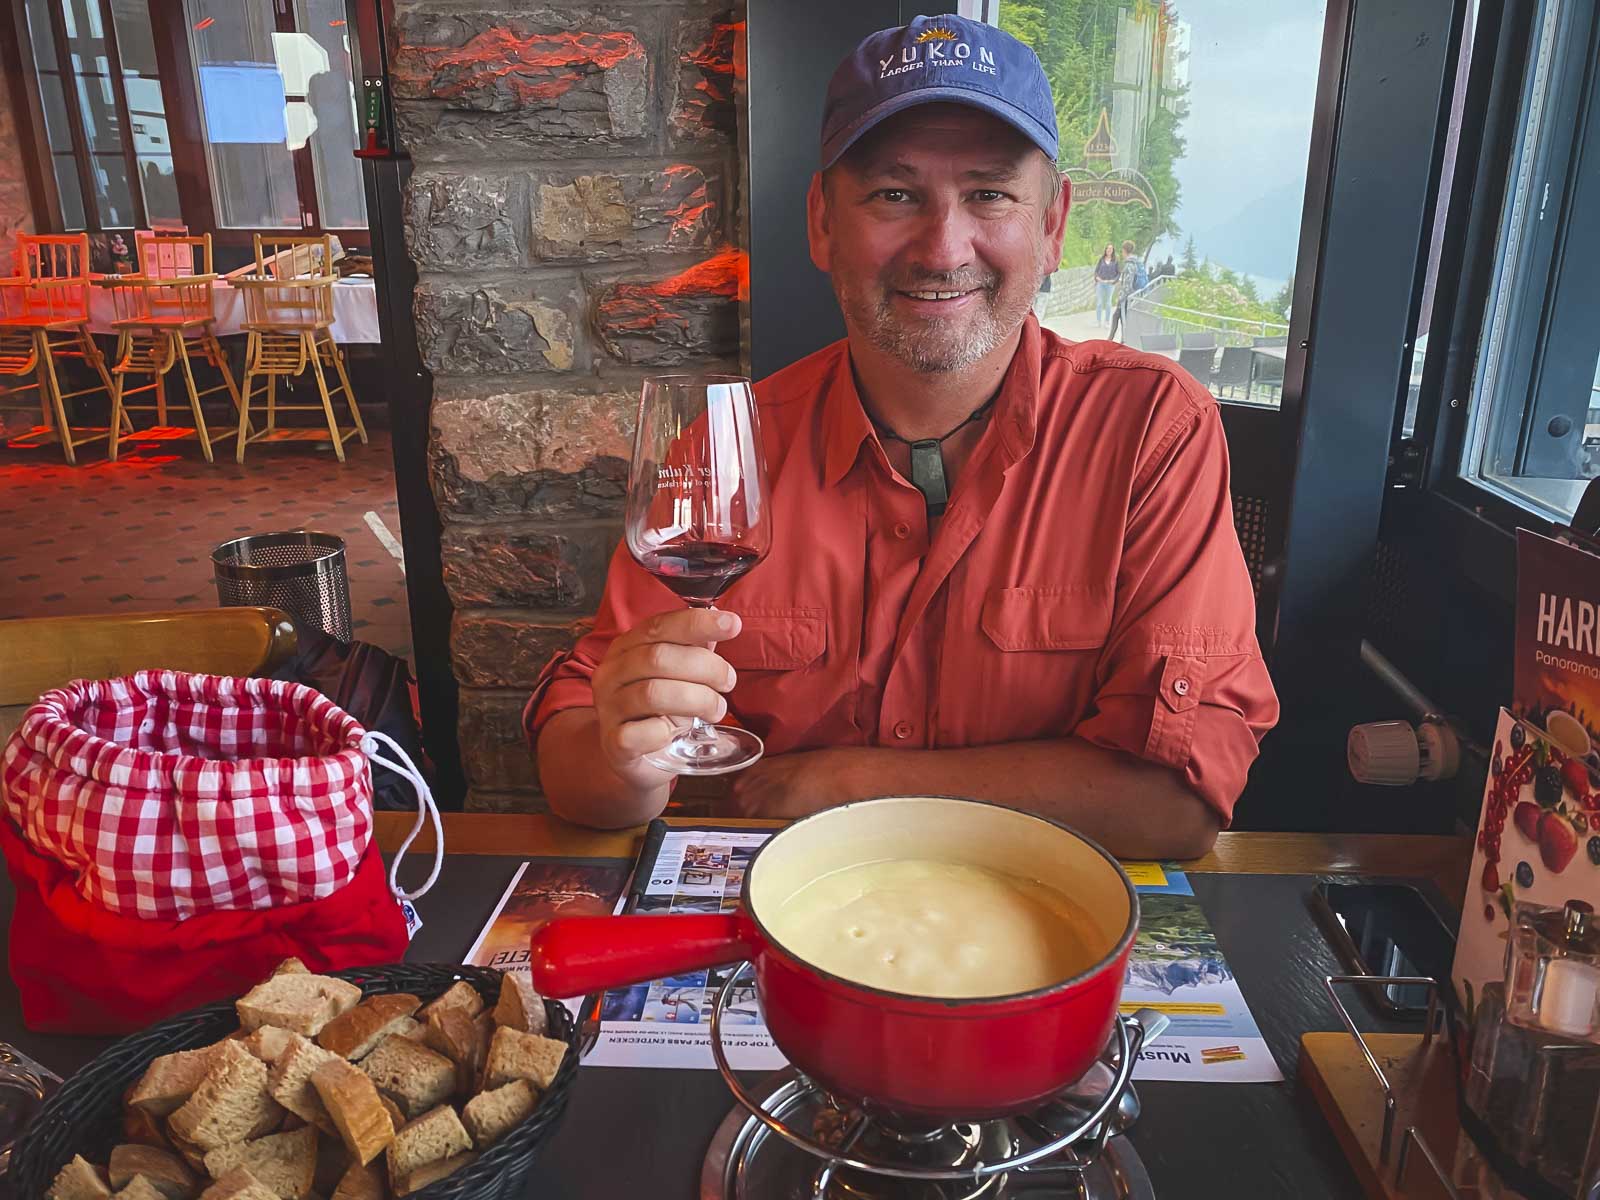 Enjoying a cheese fondue in Switzerland